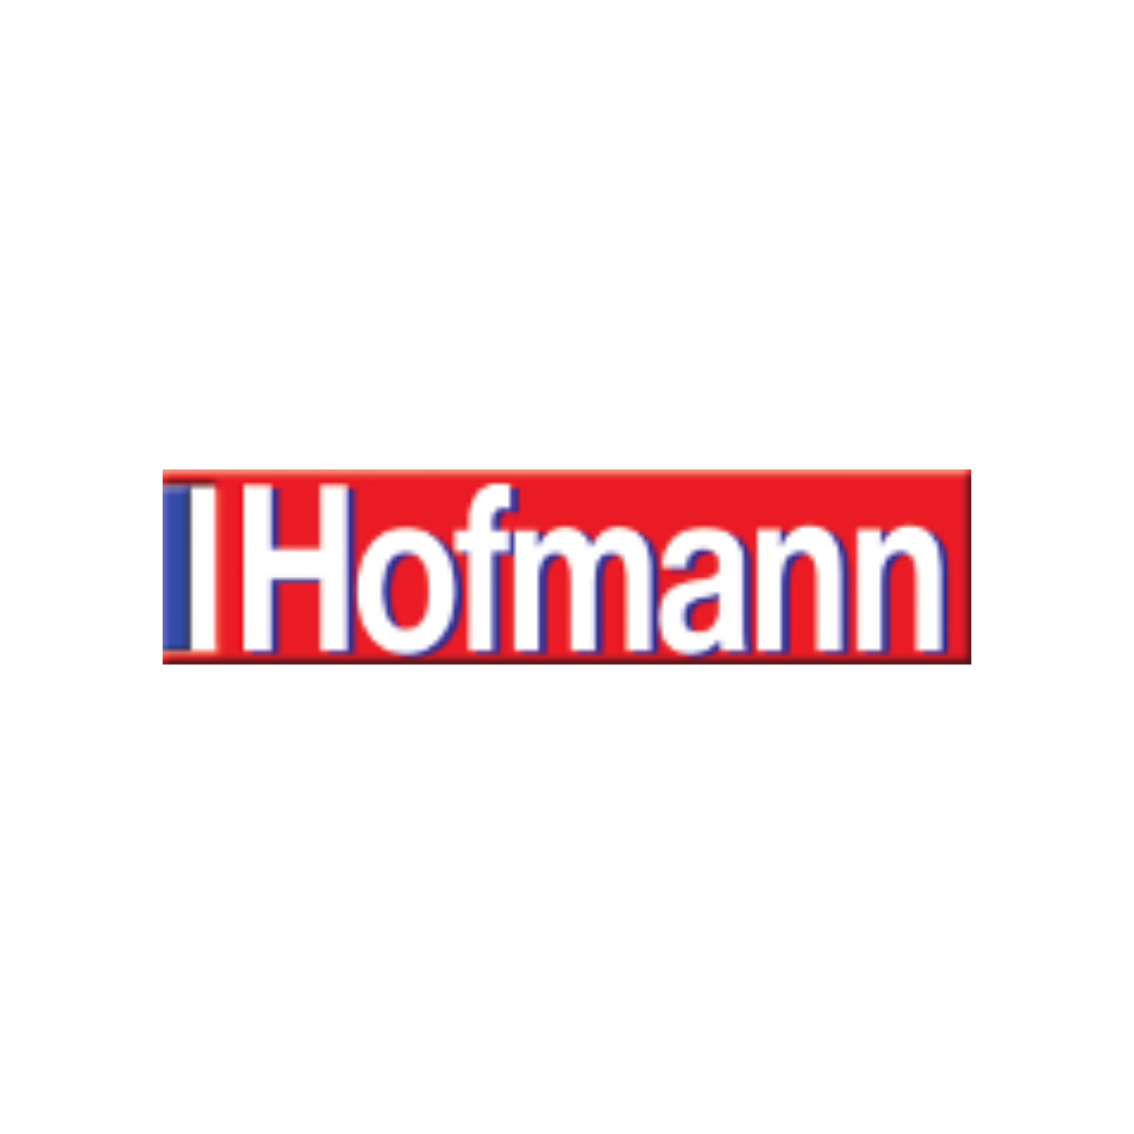 Hofmann-logo